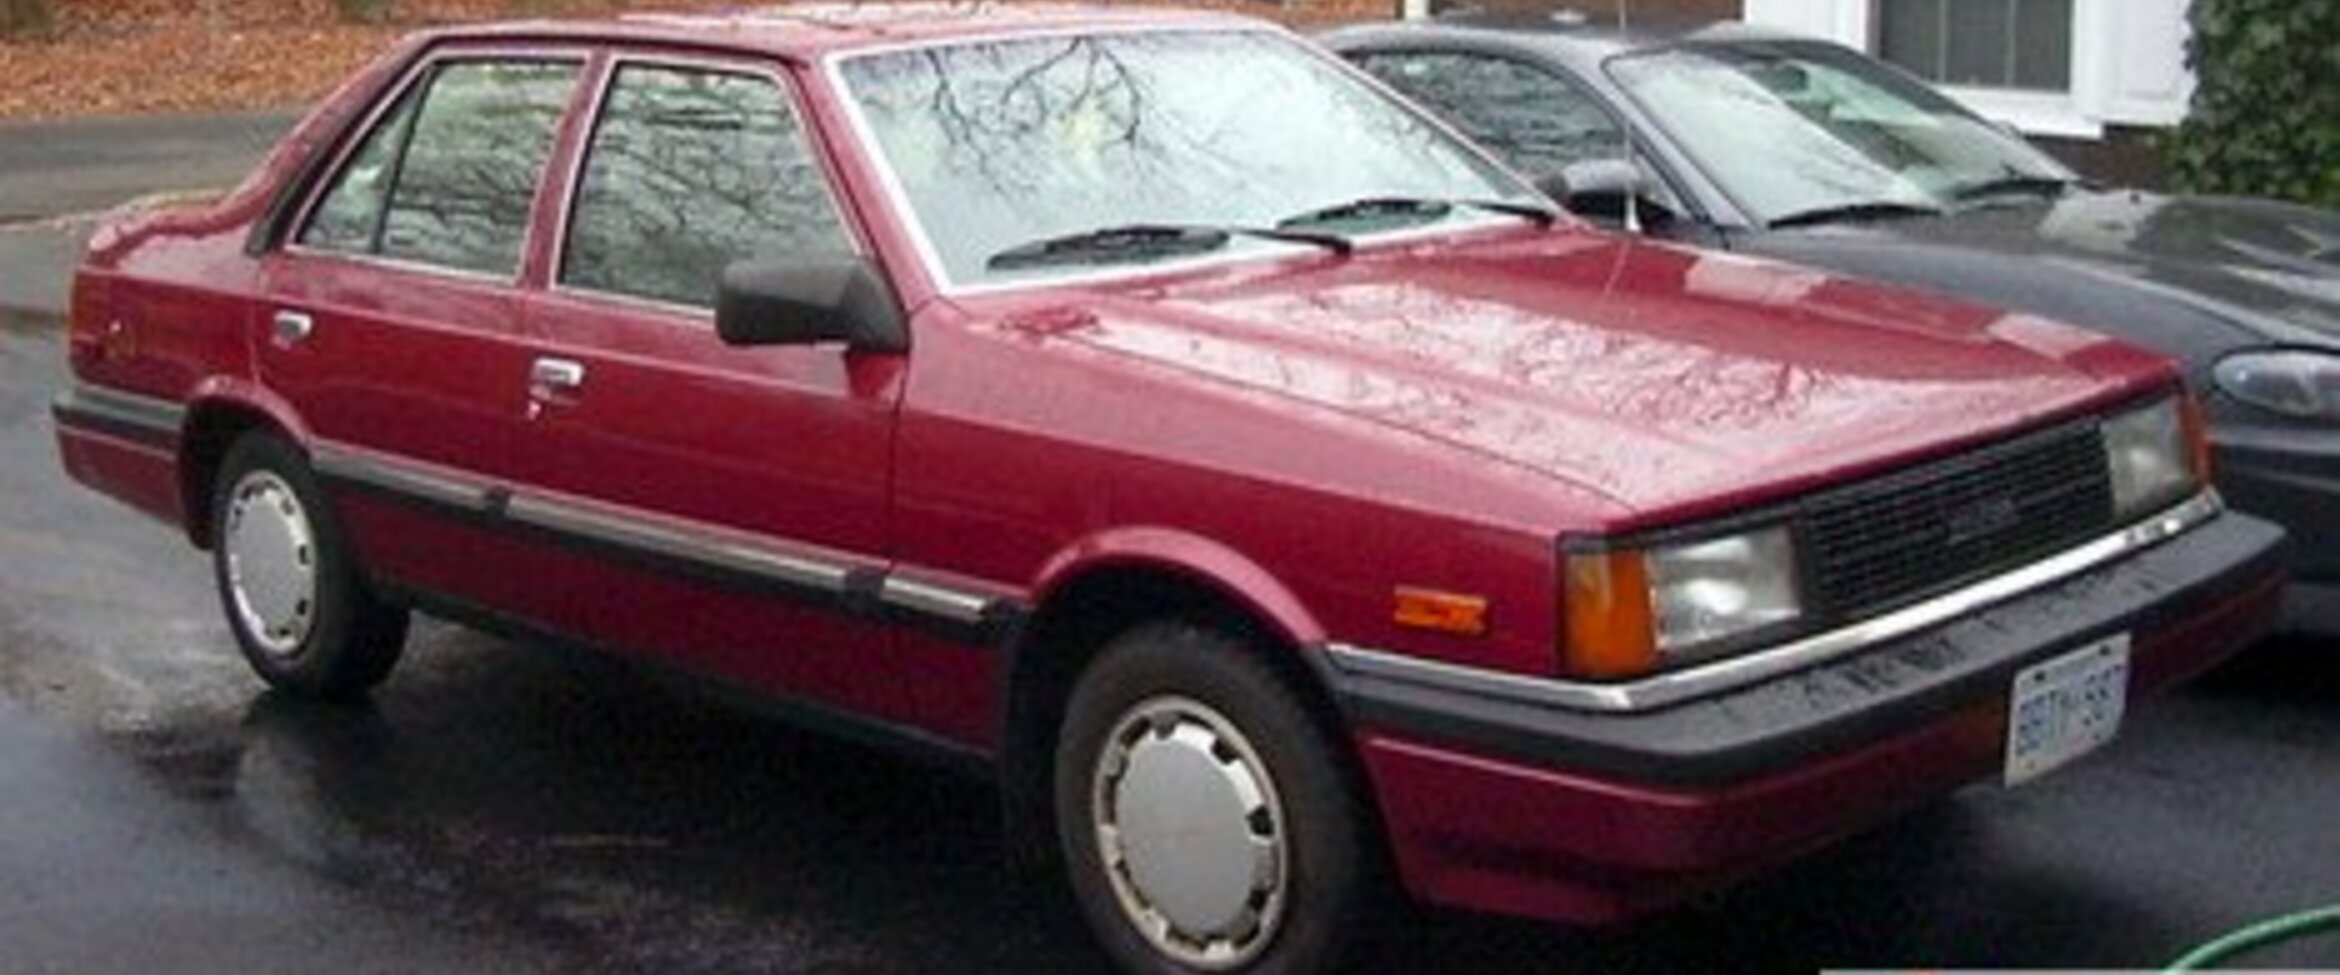 Hyundai Stellar 1.6 (75 Hp) Automatic 1983, 1984, 1985, 1986, 1987, 1988, 1989, 1990, 1991, 1992, 1993 